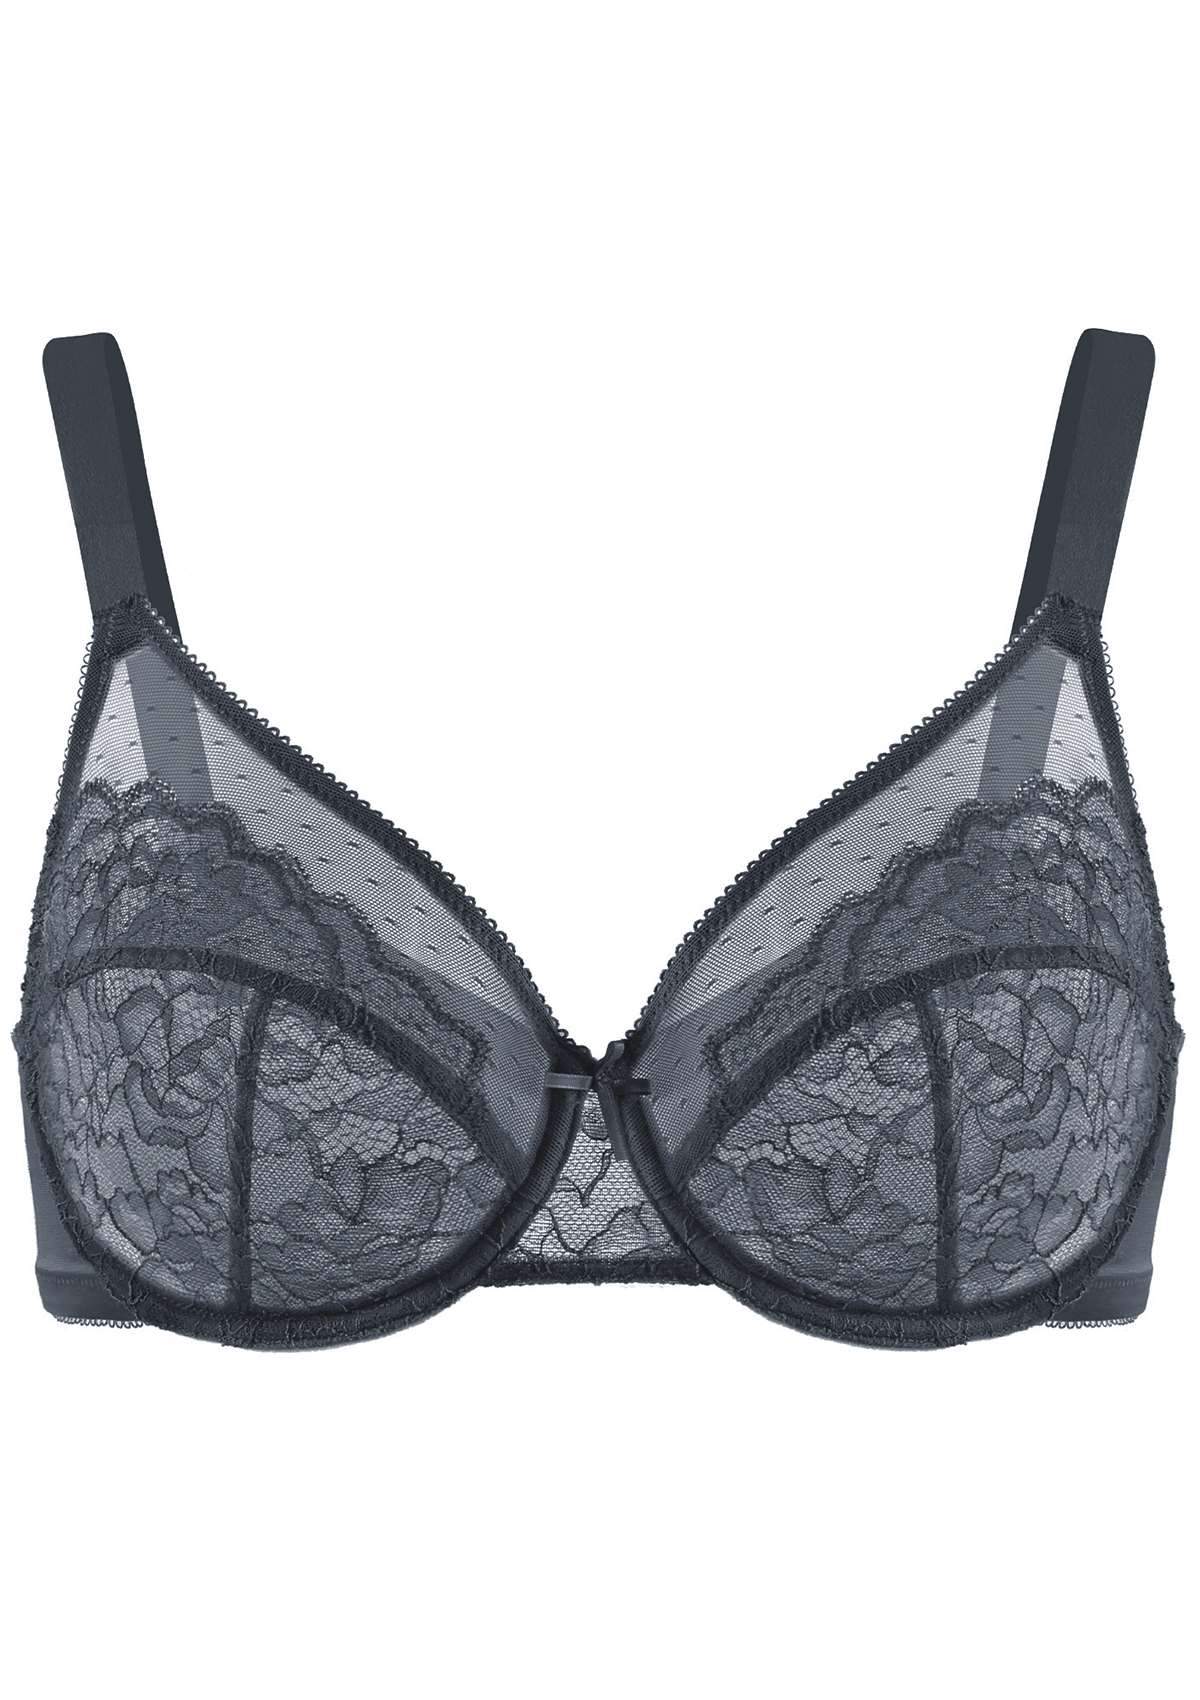 HSIA Enchante Matching Bra And Underwear Sets: Uplift Big Boobs Bra - Dark Gray / 36 / DD/E